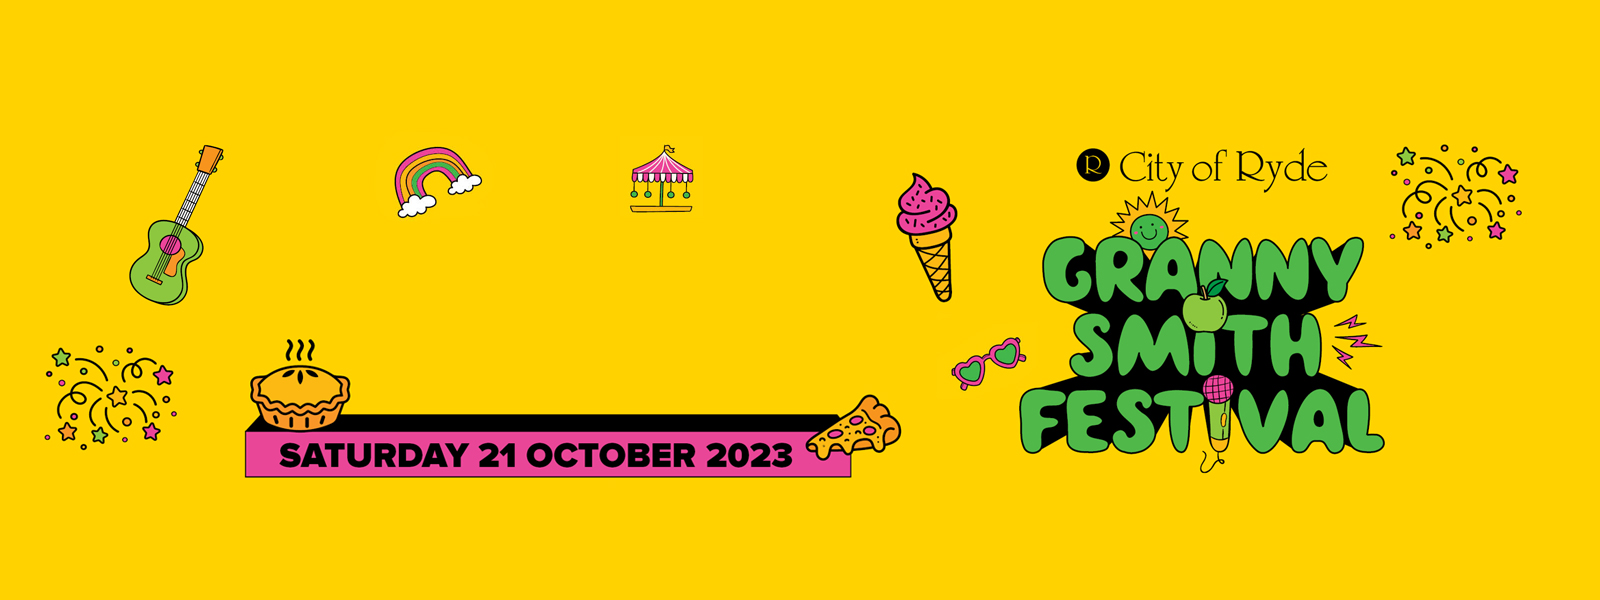 2023 Granny Smith Festival banner 